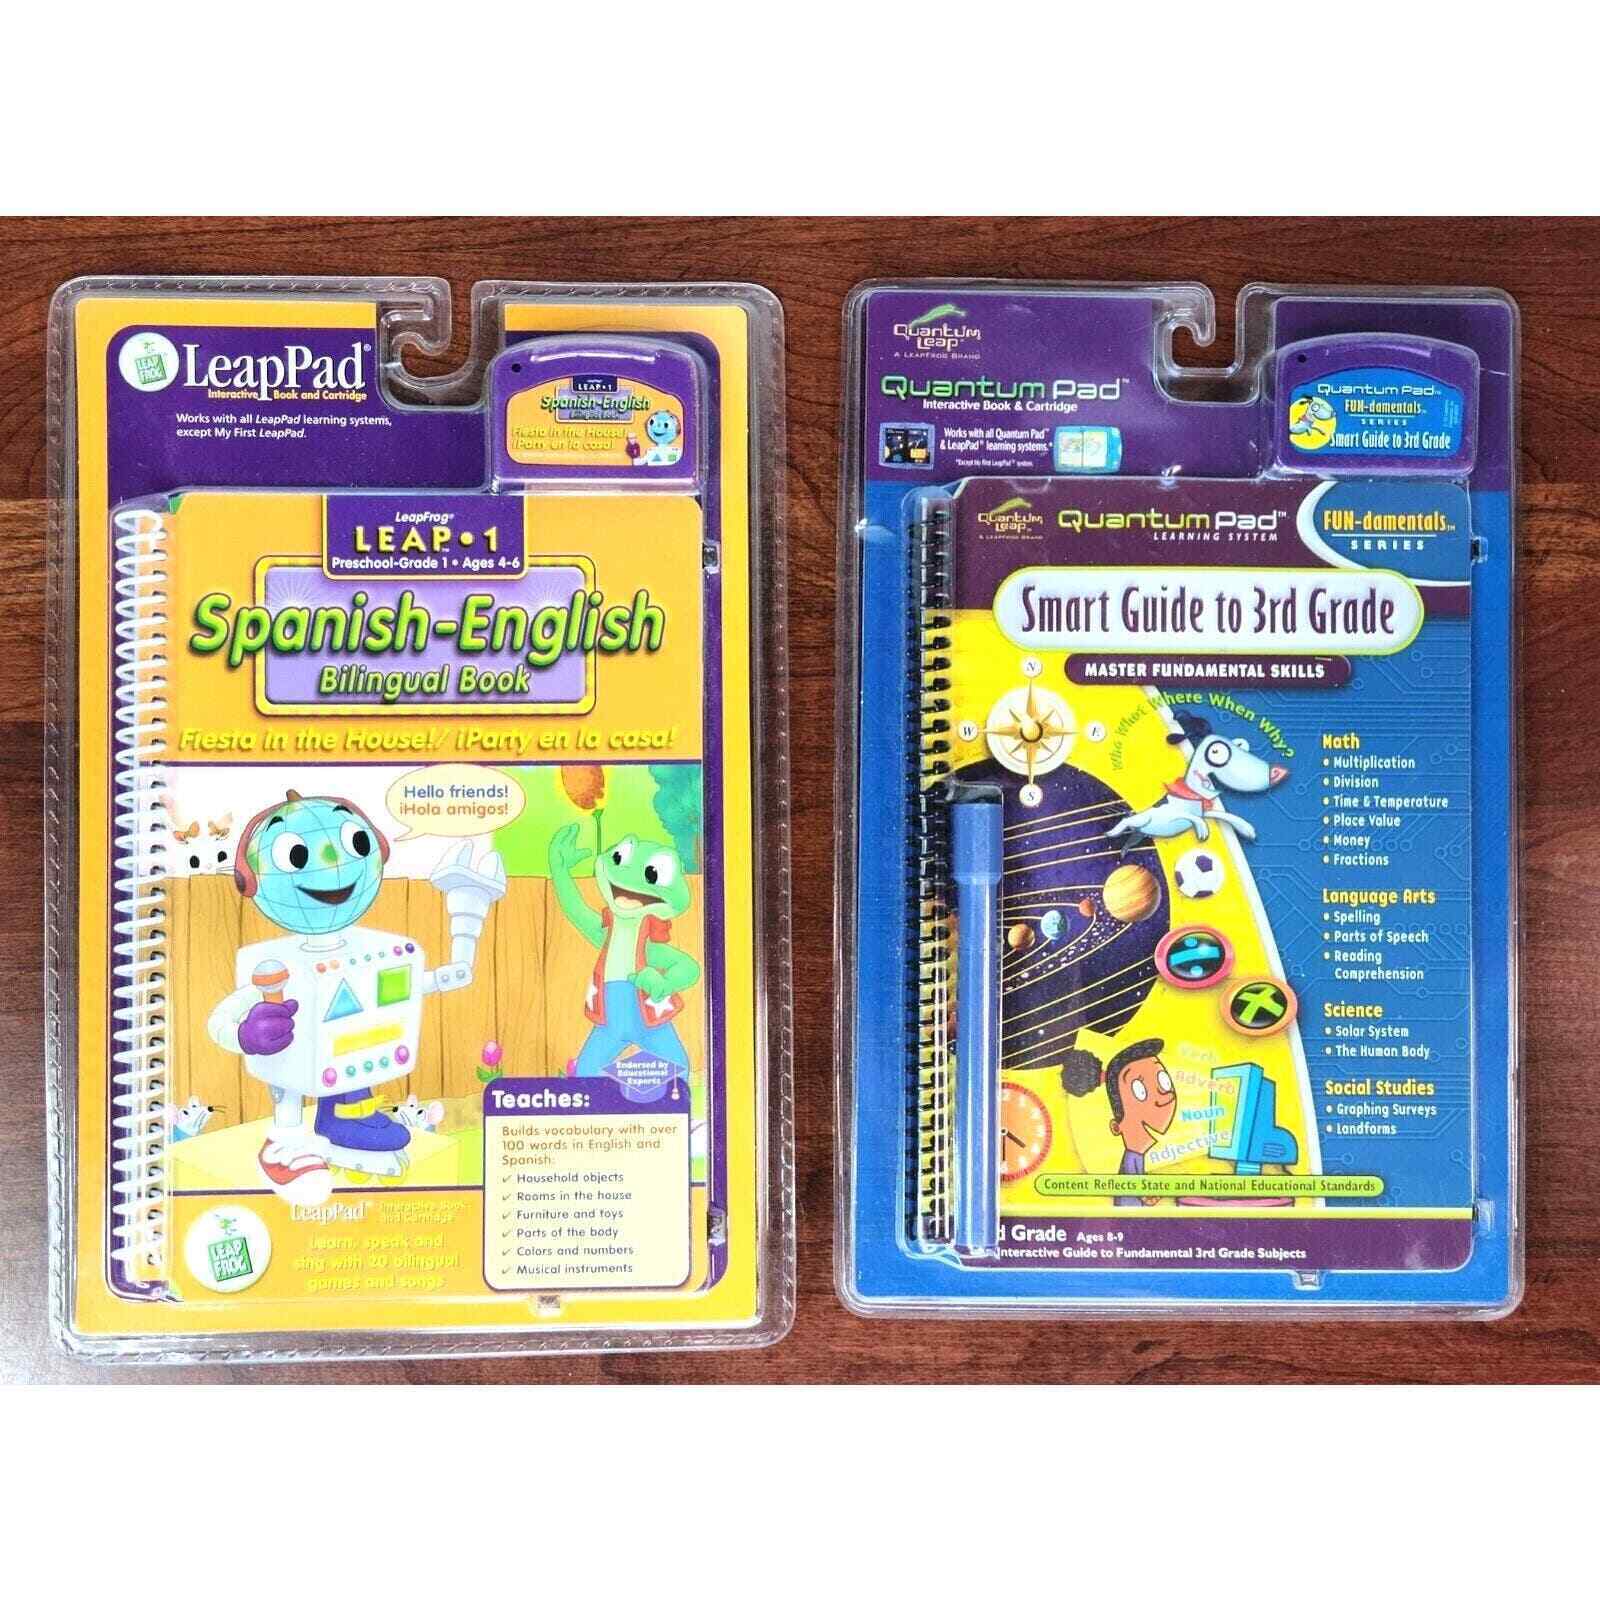 LeapPad Spanish-English Bilingual Book & QuantumPad Smart Guide to 3rd Grade NEW